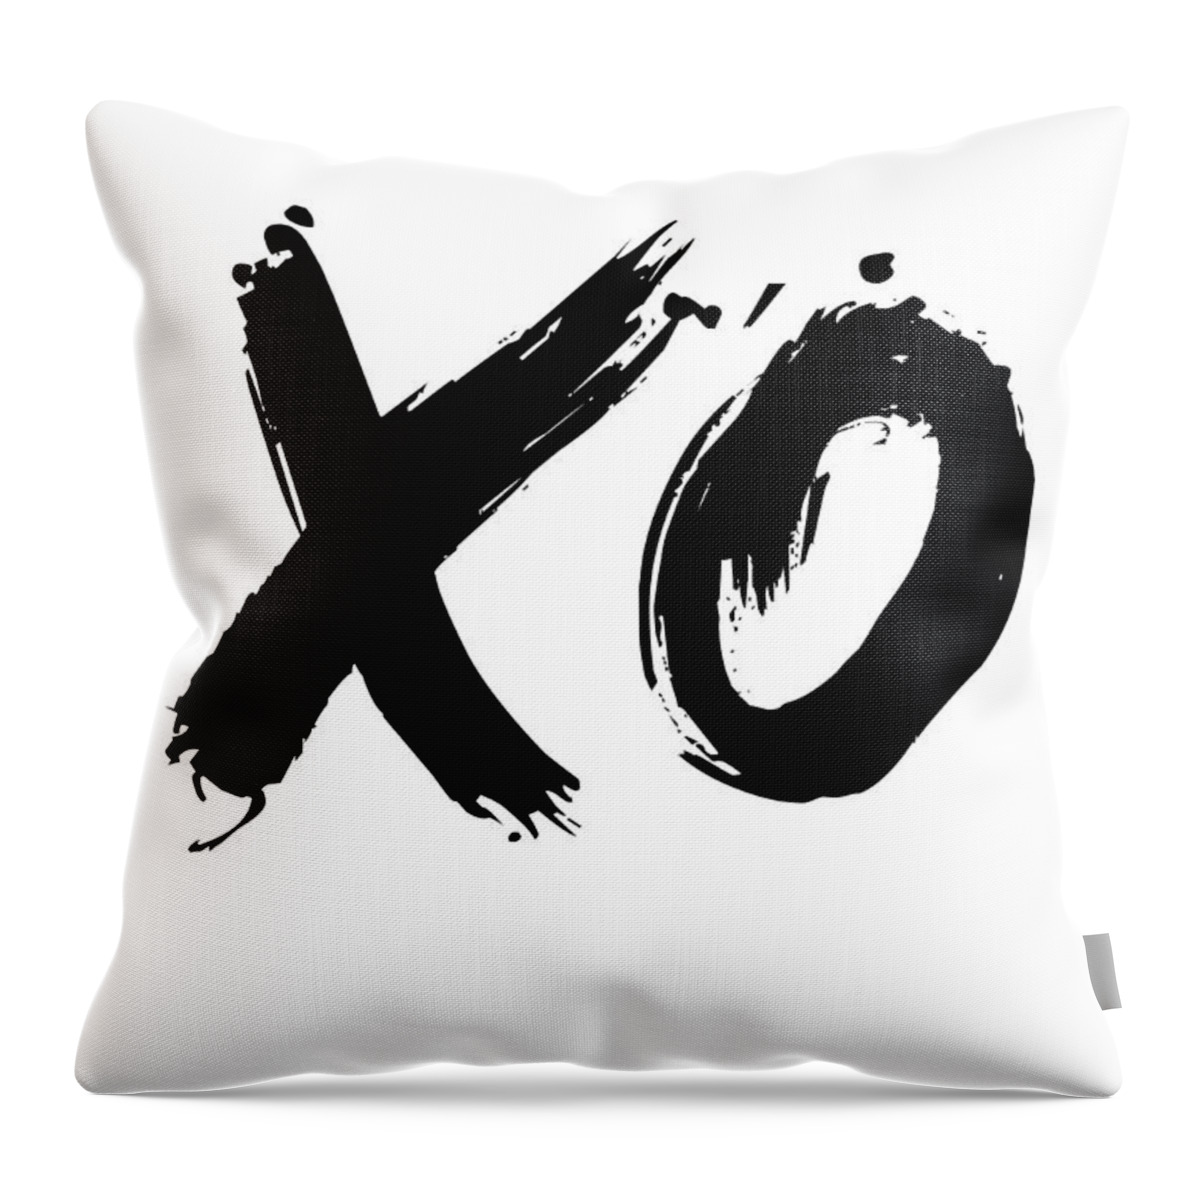 Motivational Throw Pillow featuring the digital art XO Poster White by Naxart Studio